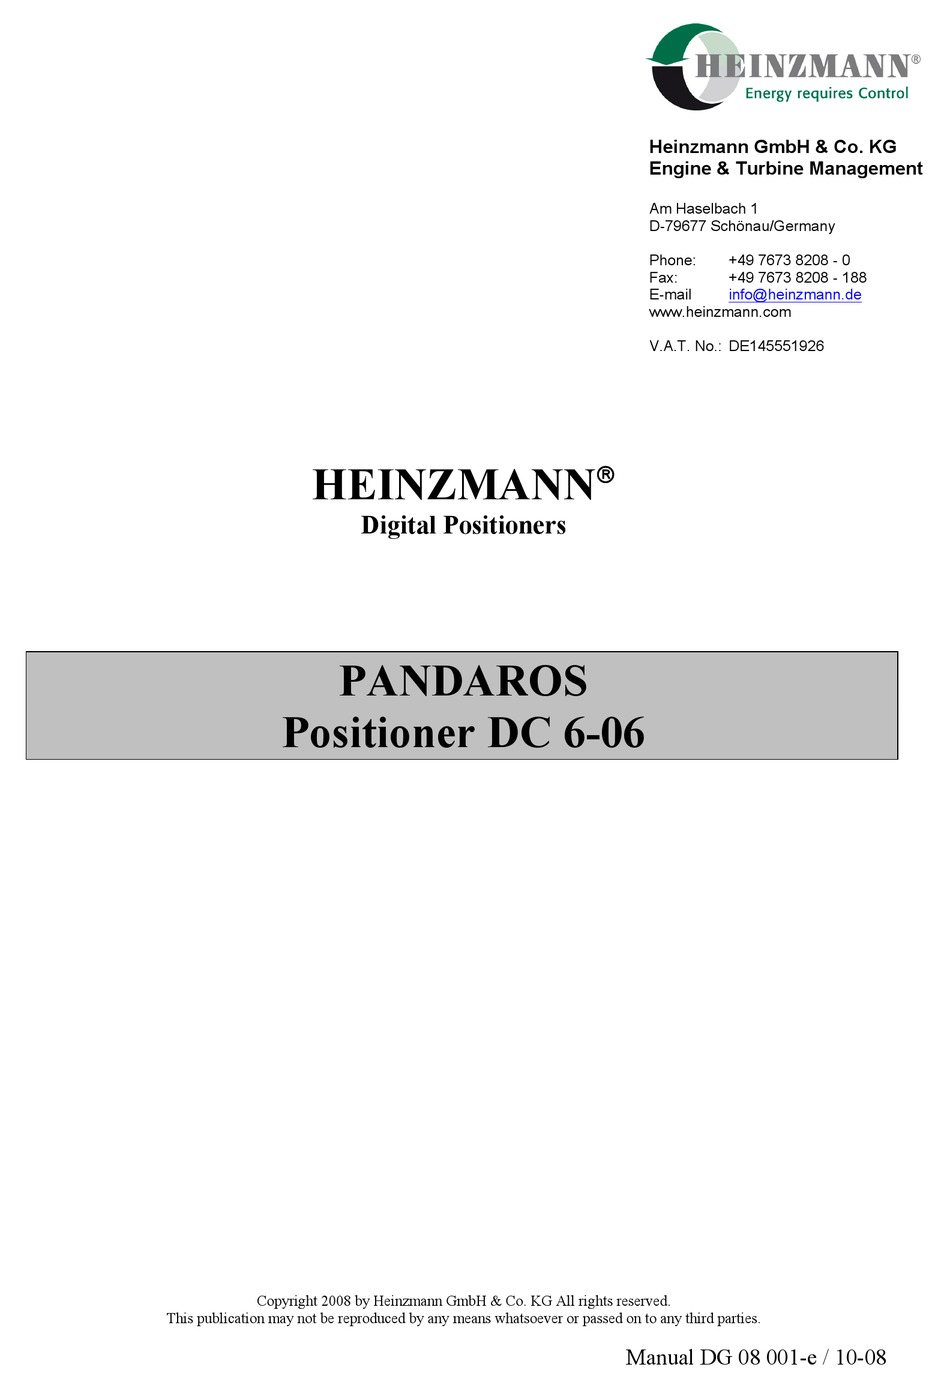 Heinzmann Pandaros Dc 6 06 Manual Pdf Download Manualslib